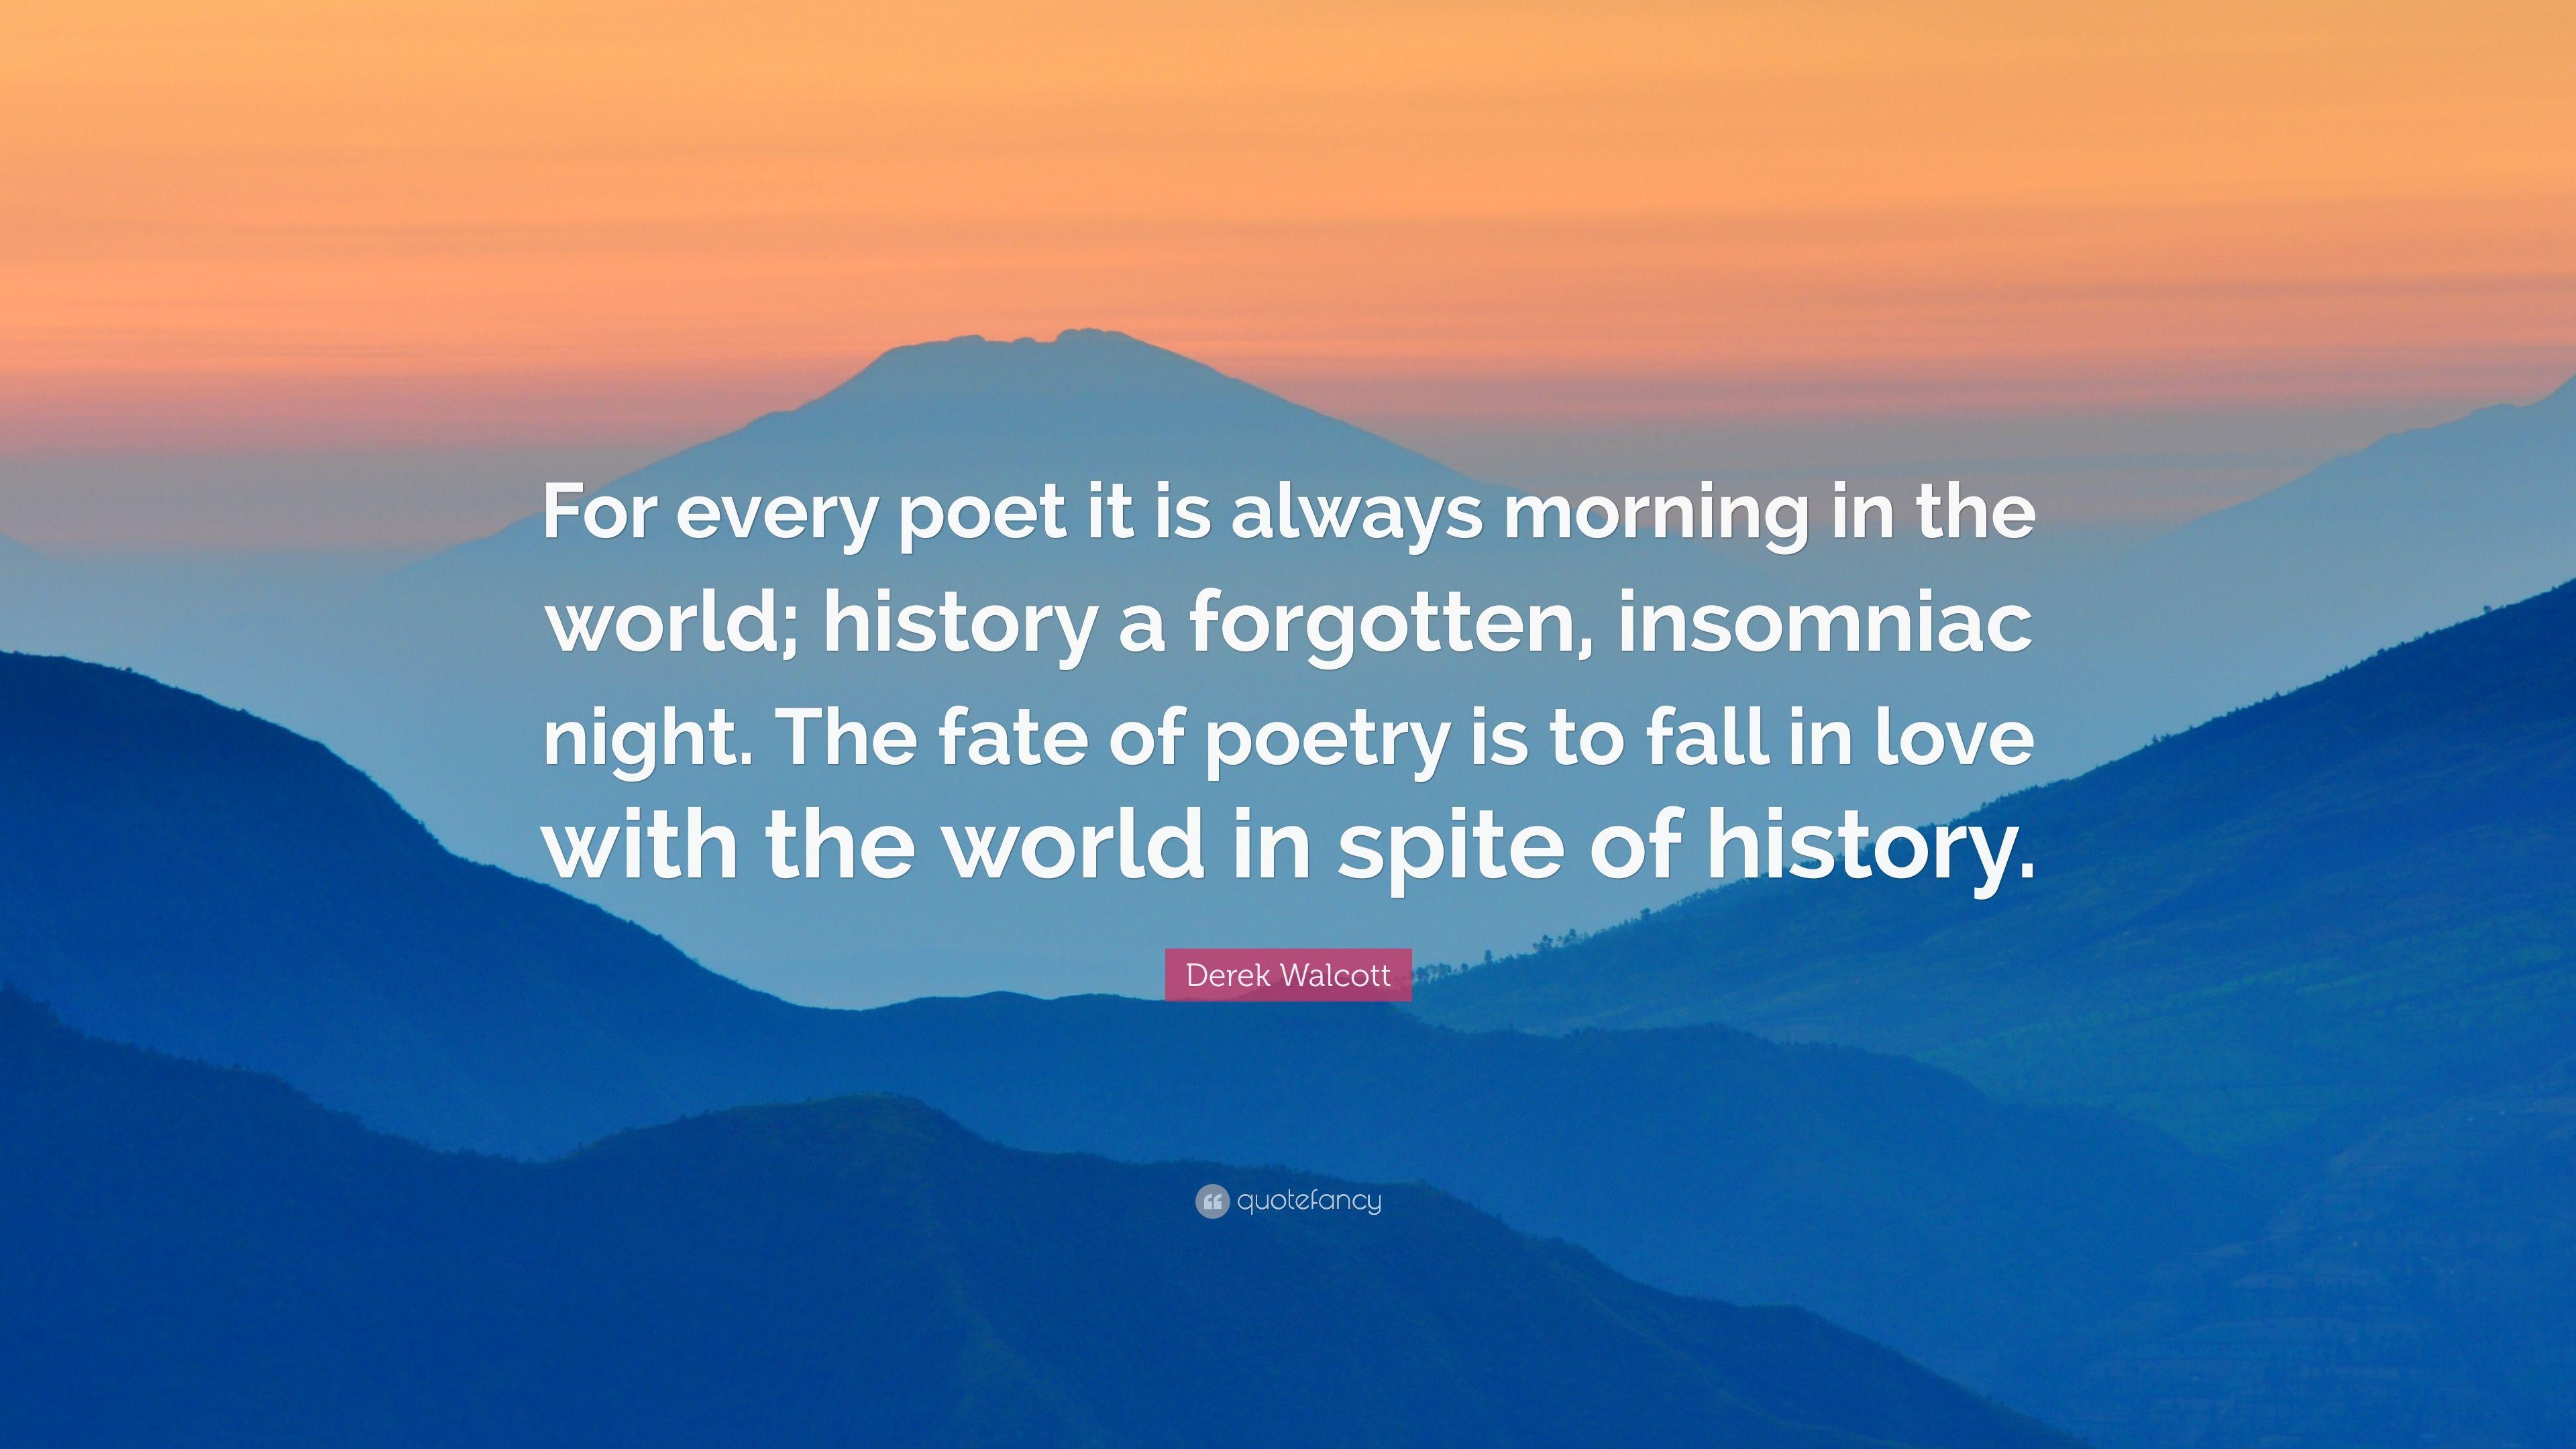 Derek Walcott Quote: “For every poet it is always morning in